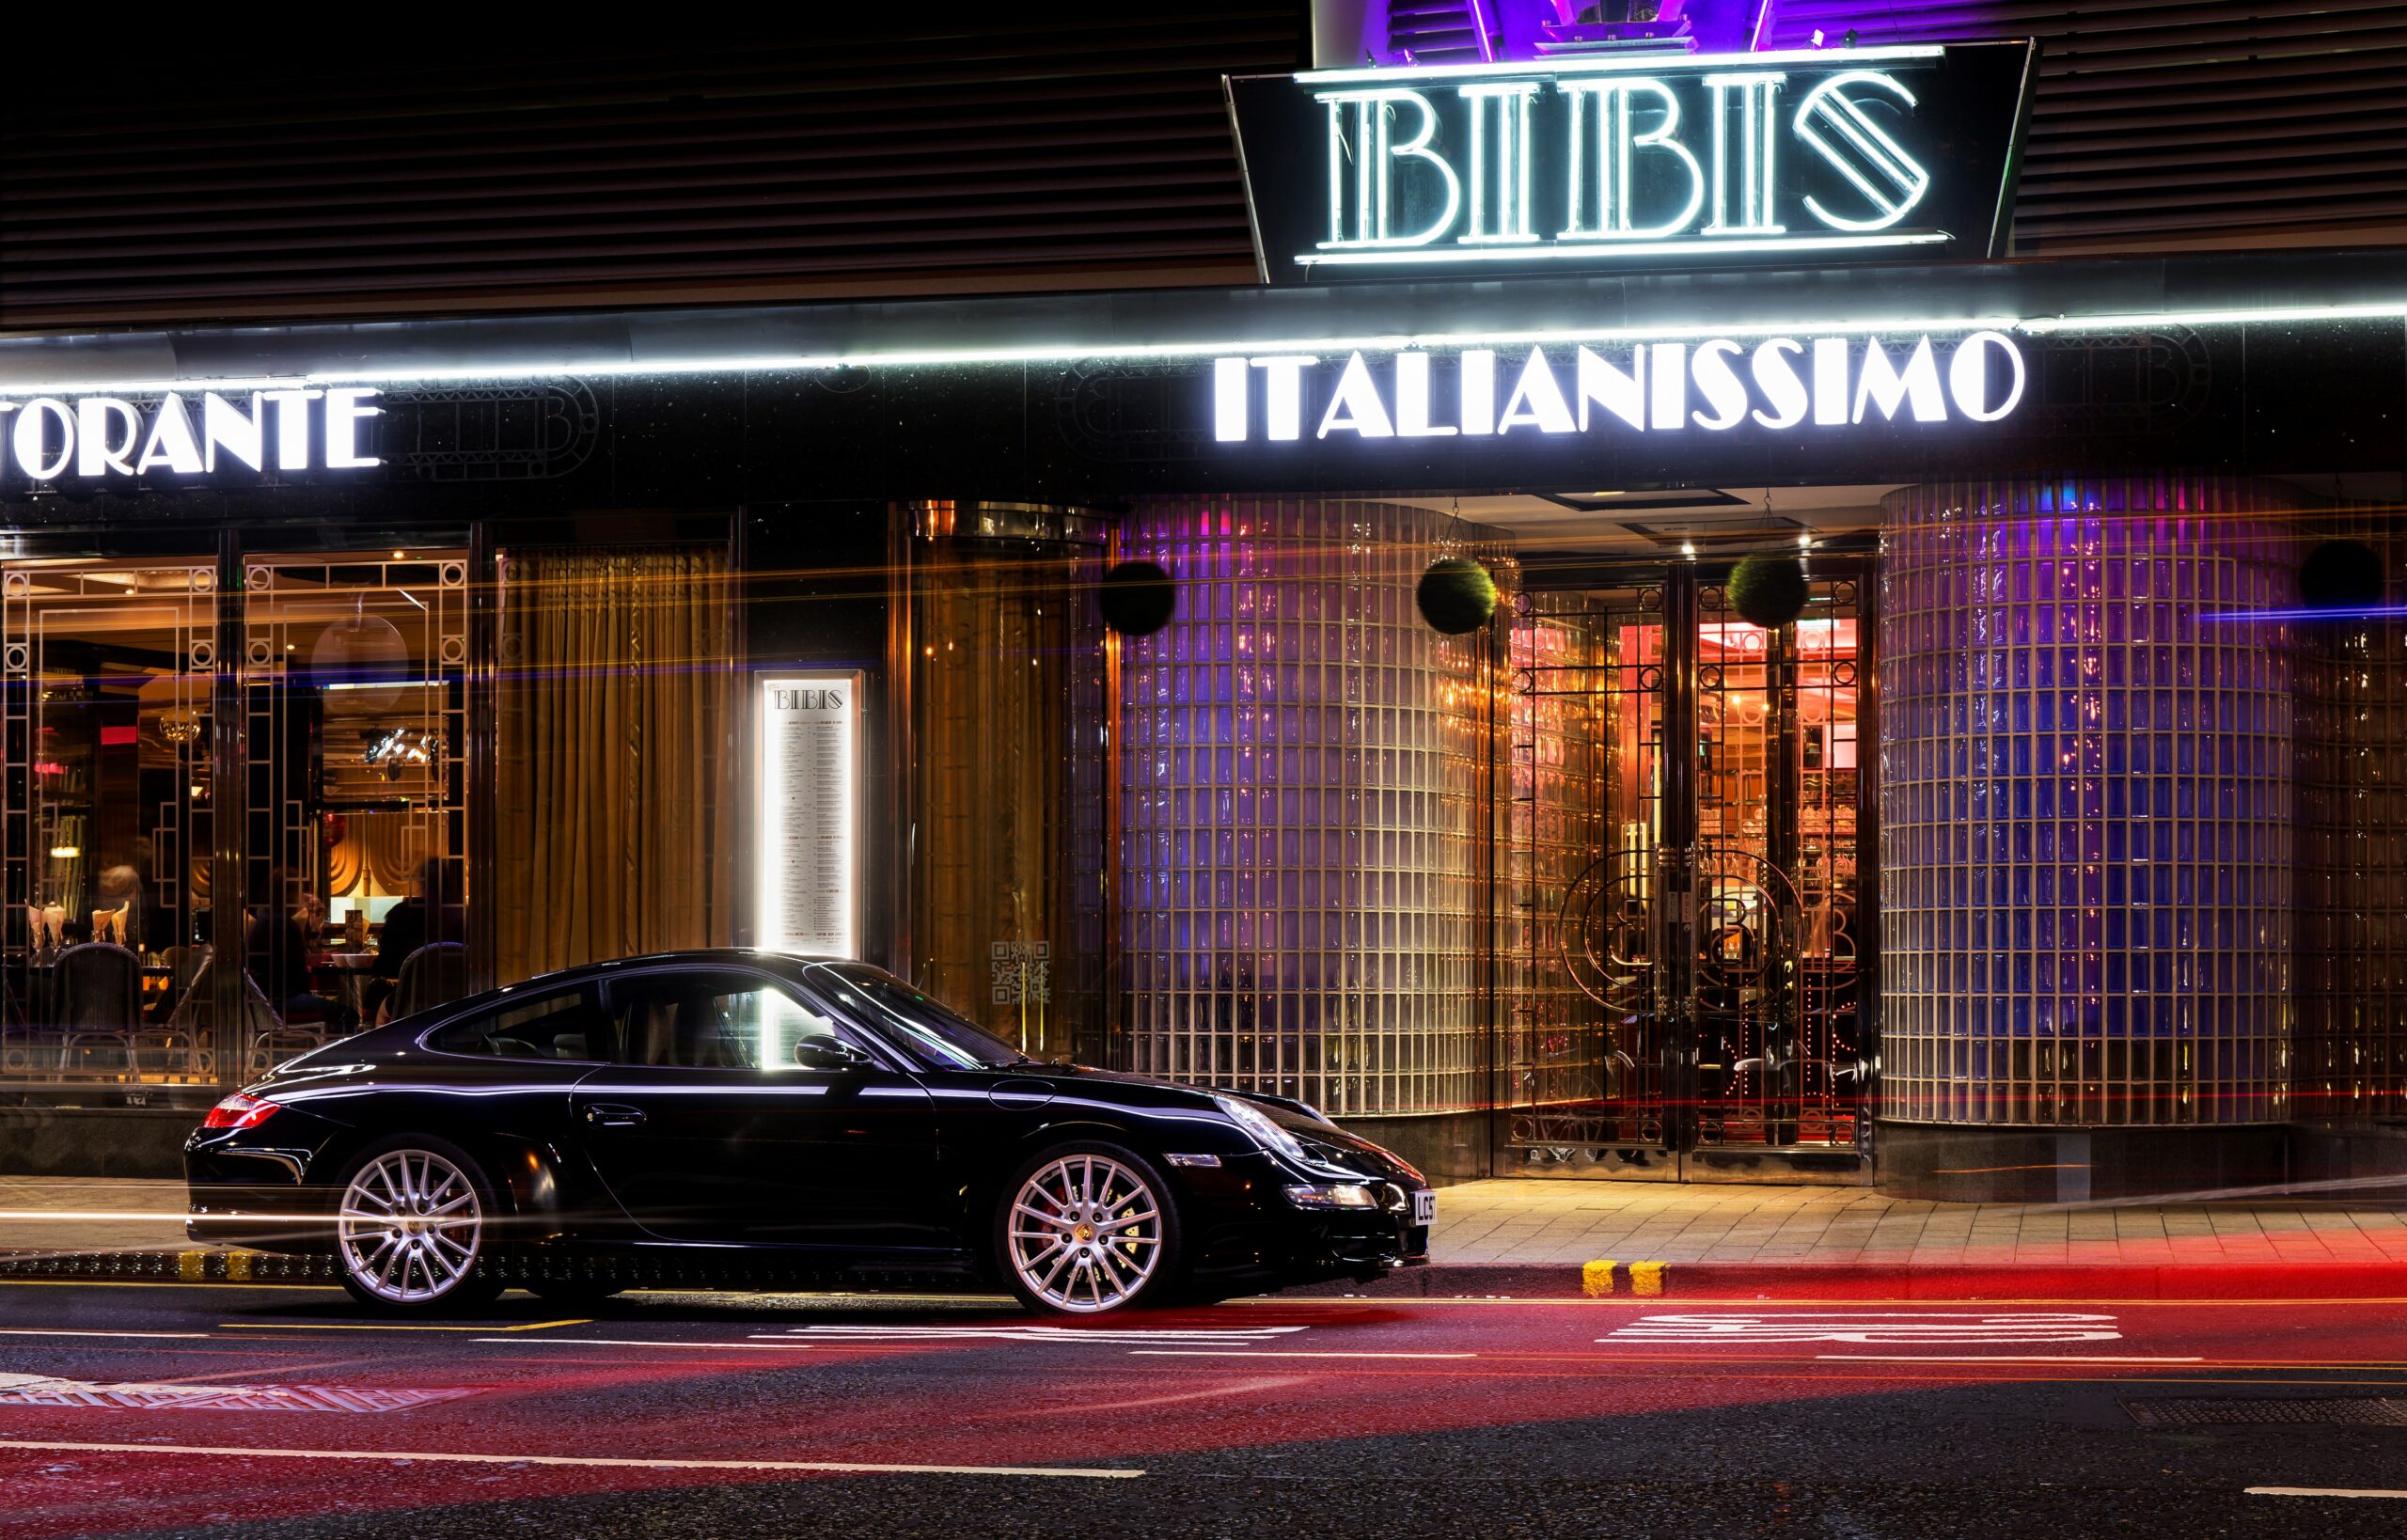 Bibis Italianissimo Restaurant & Cocktail Bar